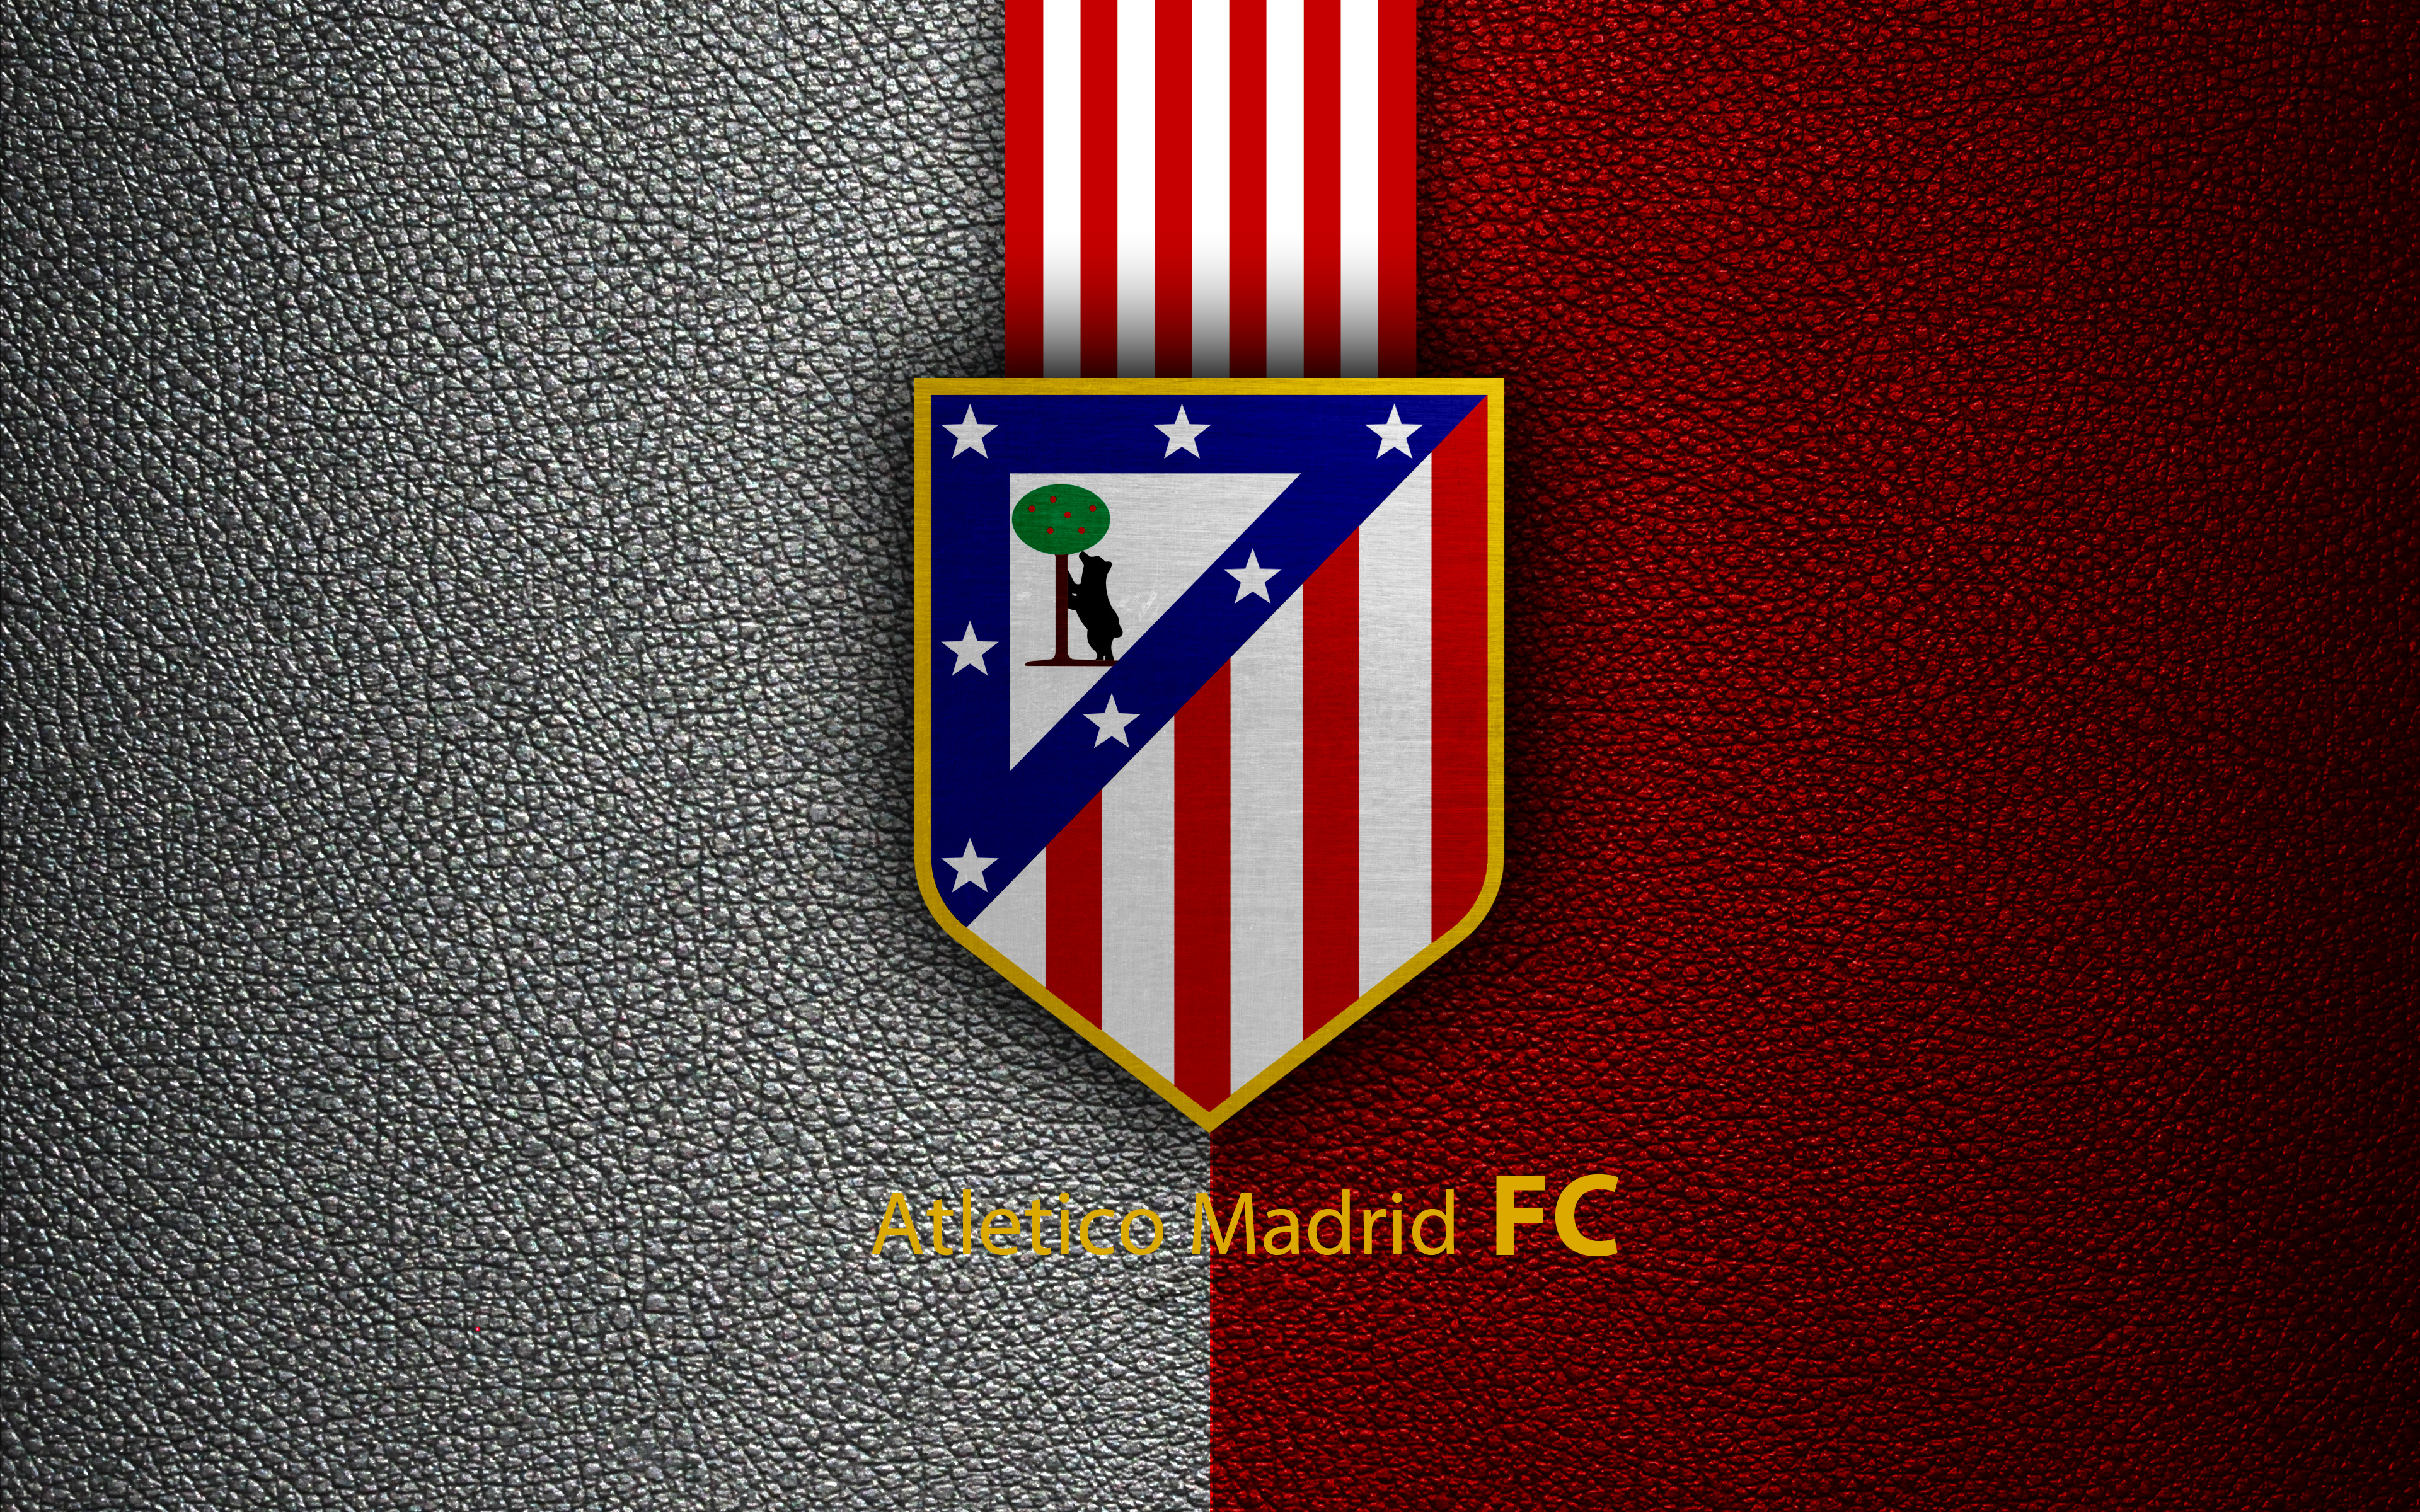 Real Madrid Fc Vs Atletic Madrid - HD Wallpaper 